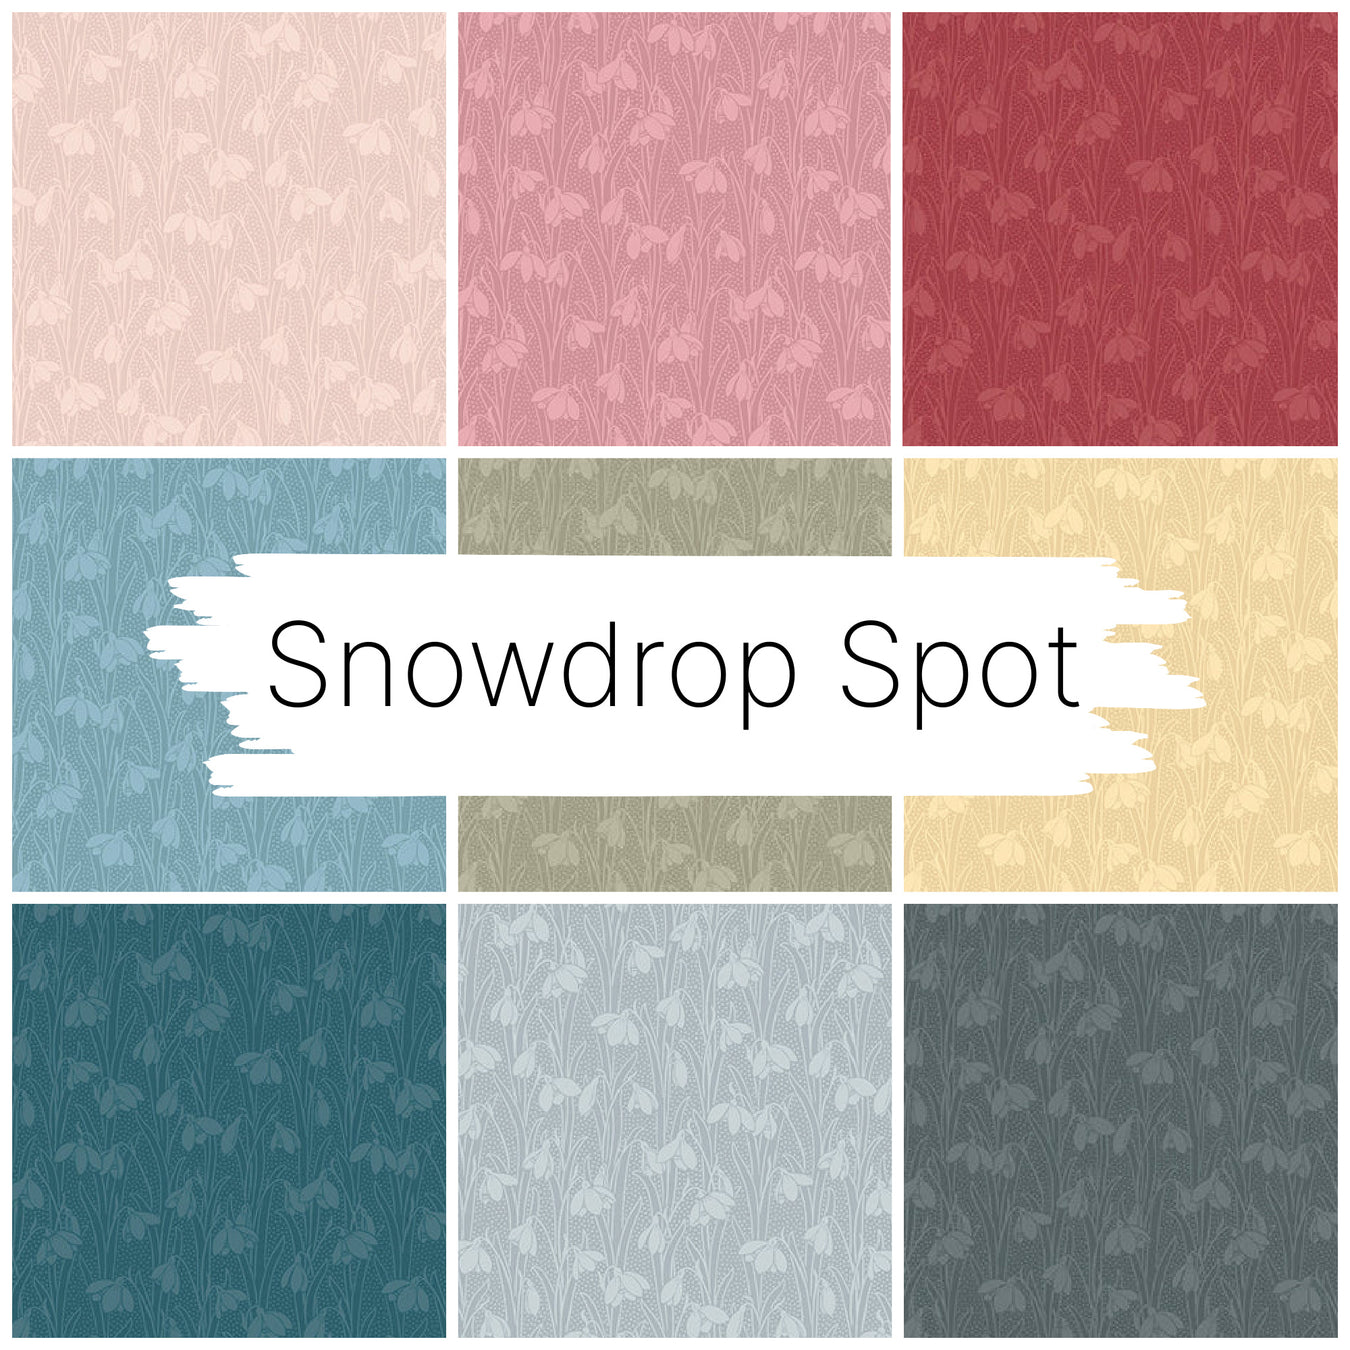 Snowdrop Spot